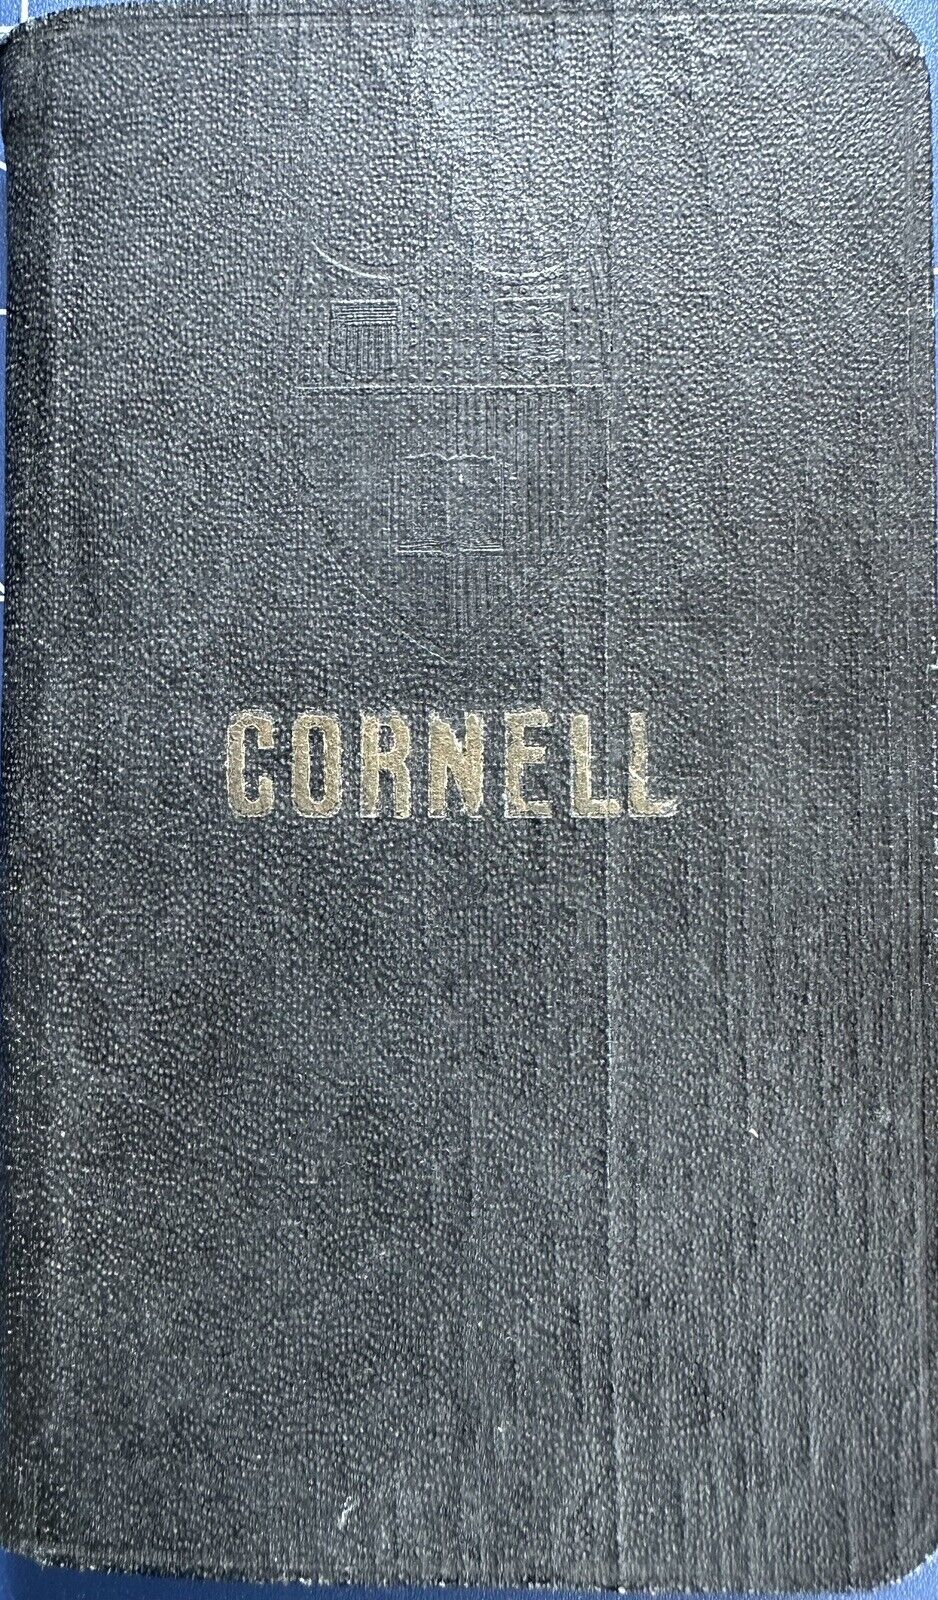 CORNELL UNIVERSITY Freshman Handbook 1926-27 (Class 1930)-some handwritten notes